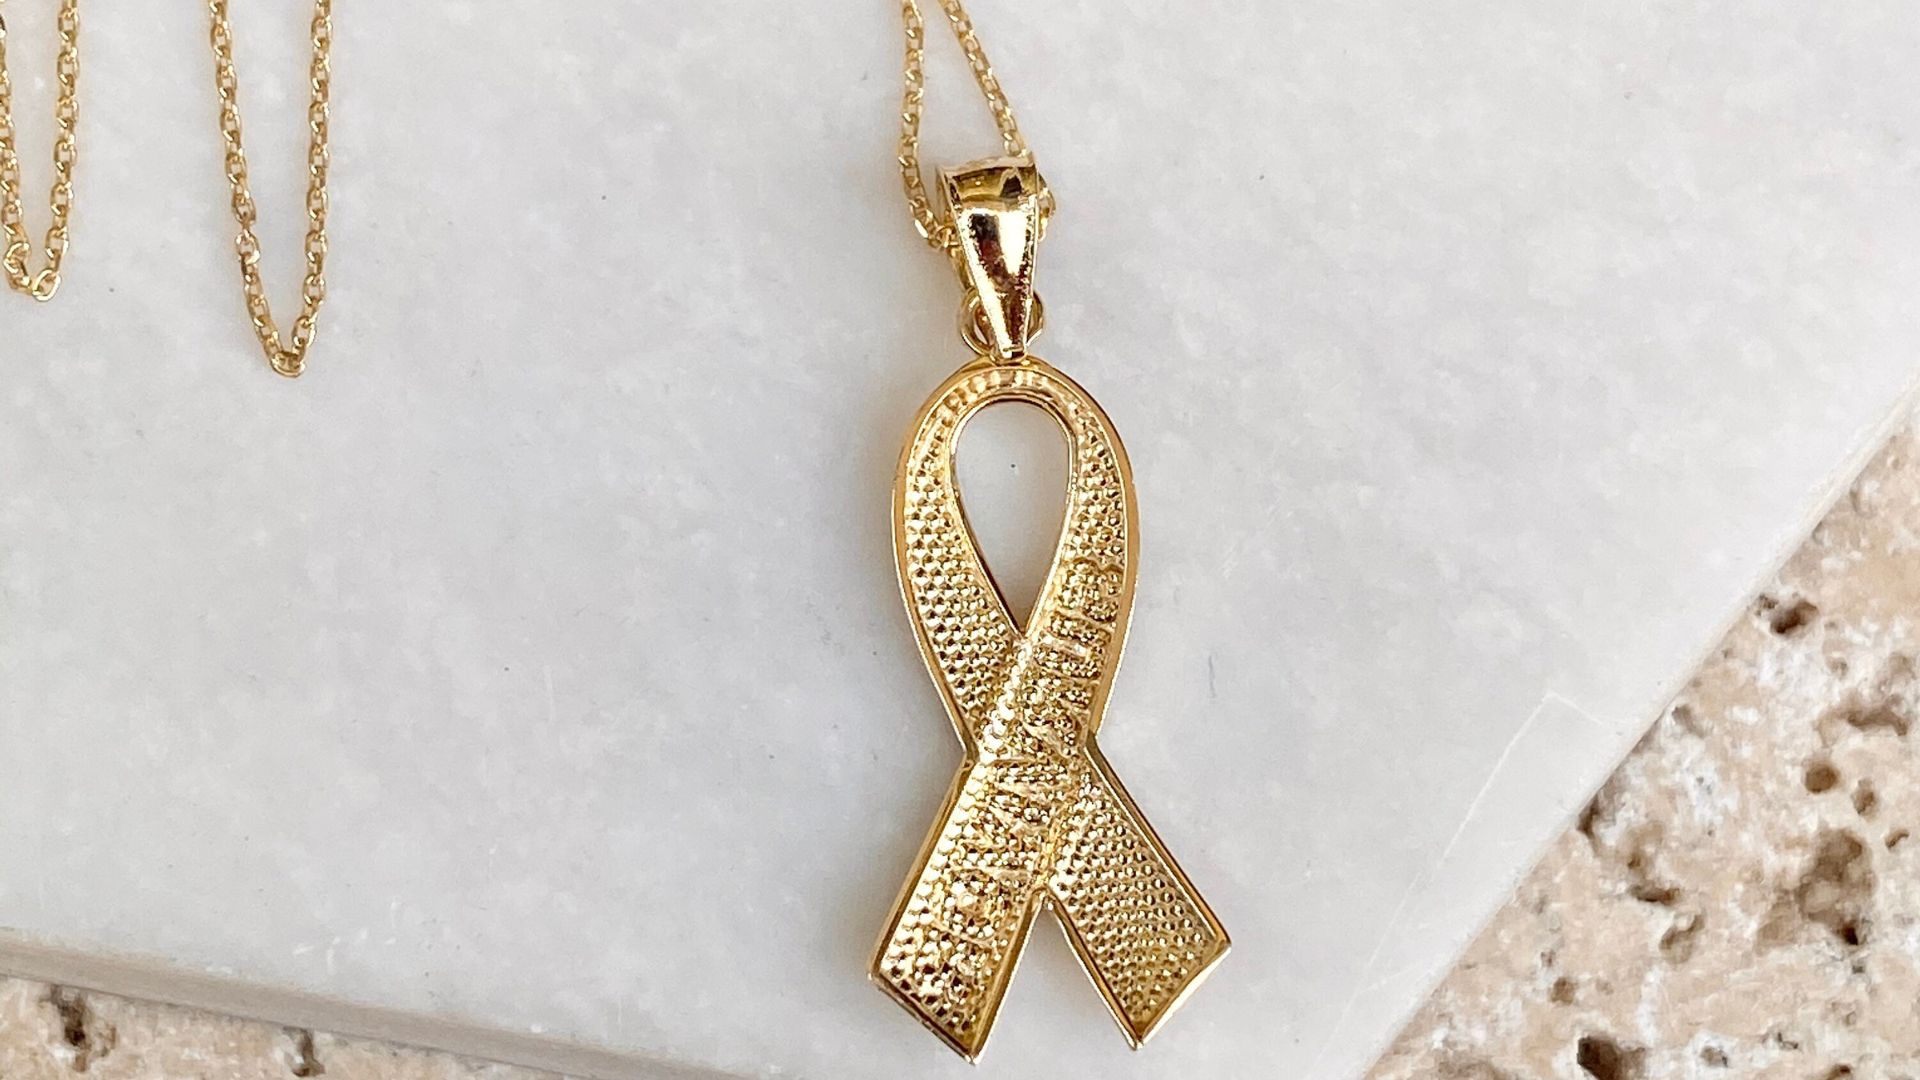 Yellow Gold Cancer Awareness Survivor Ribbon Pendant